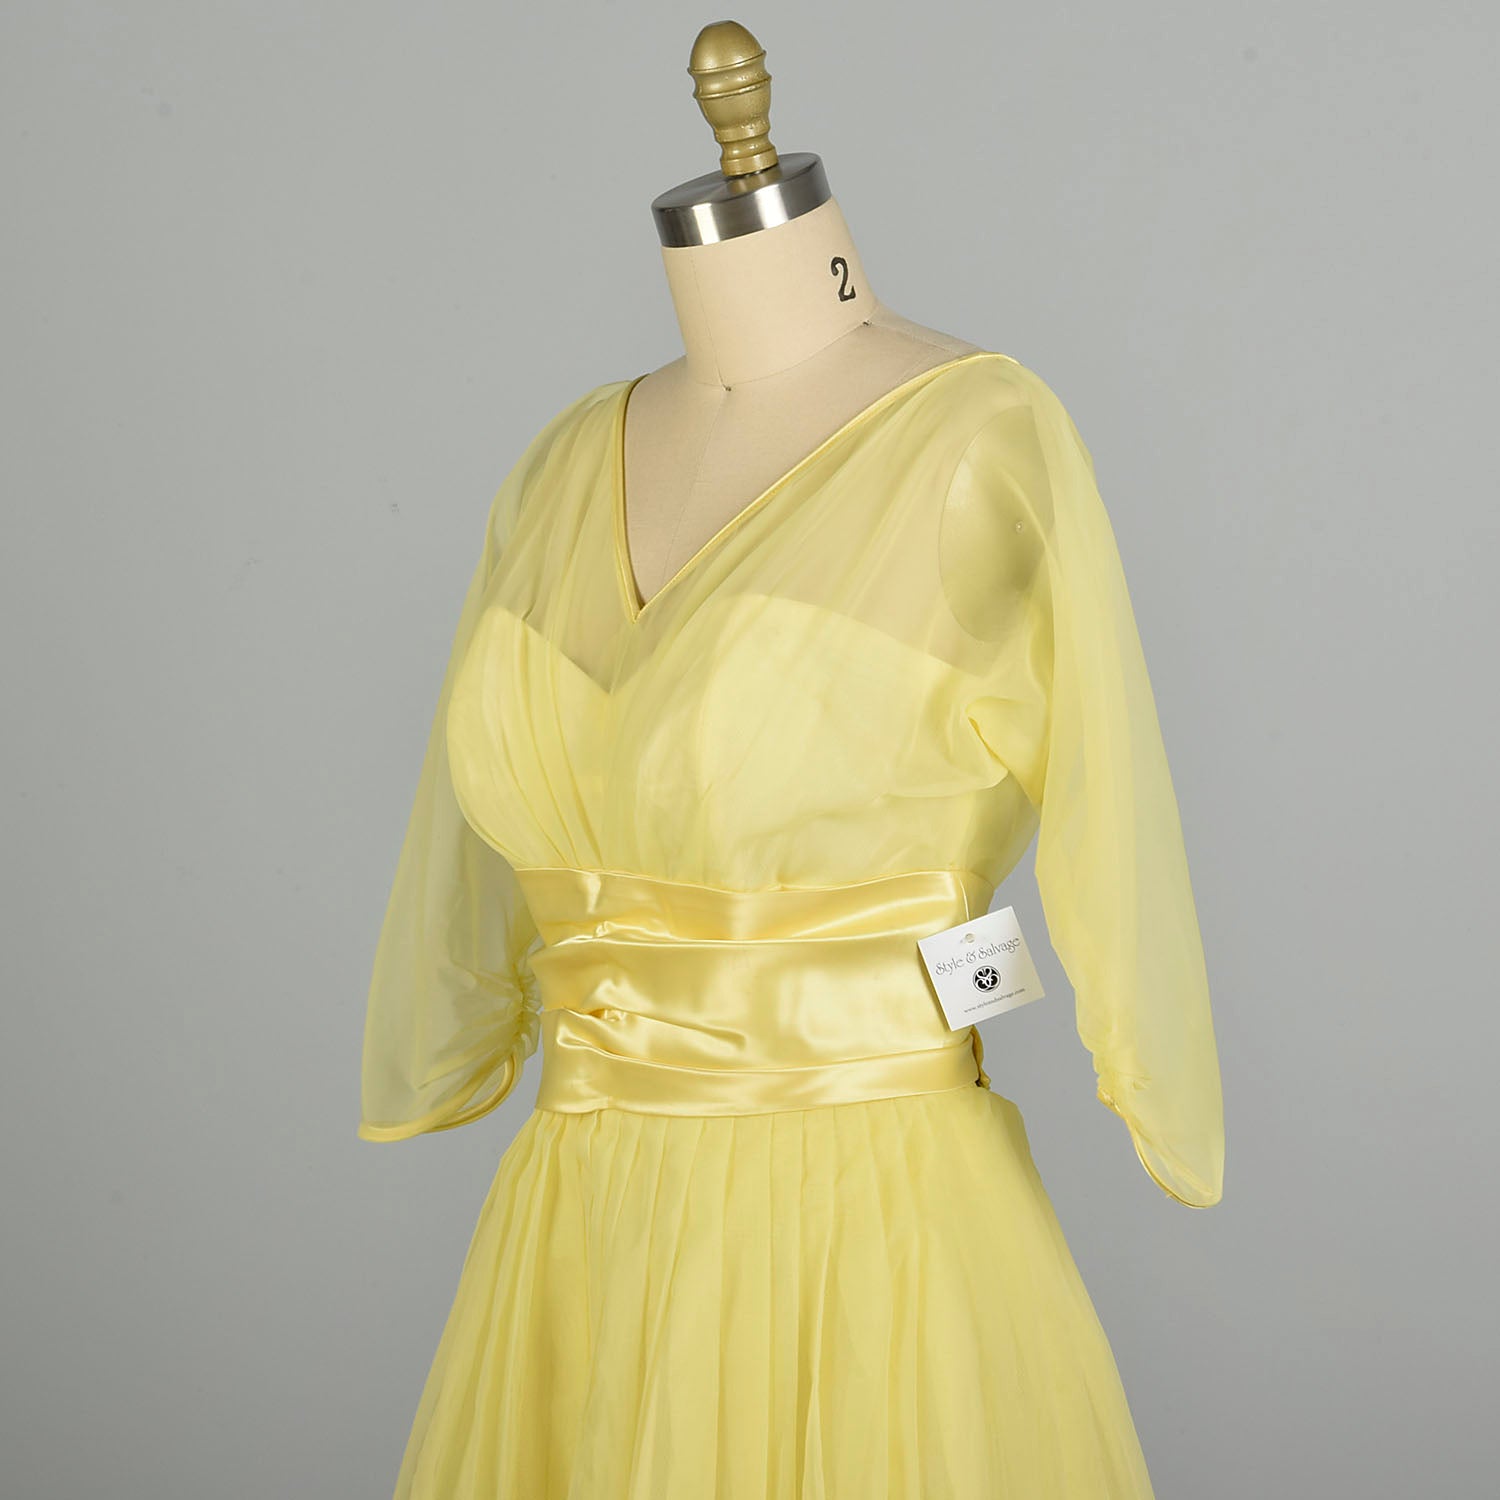 Medium 1950s Lemon Yellow Semi-Sheer Cummerbund Evening Party Prom Dress